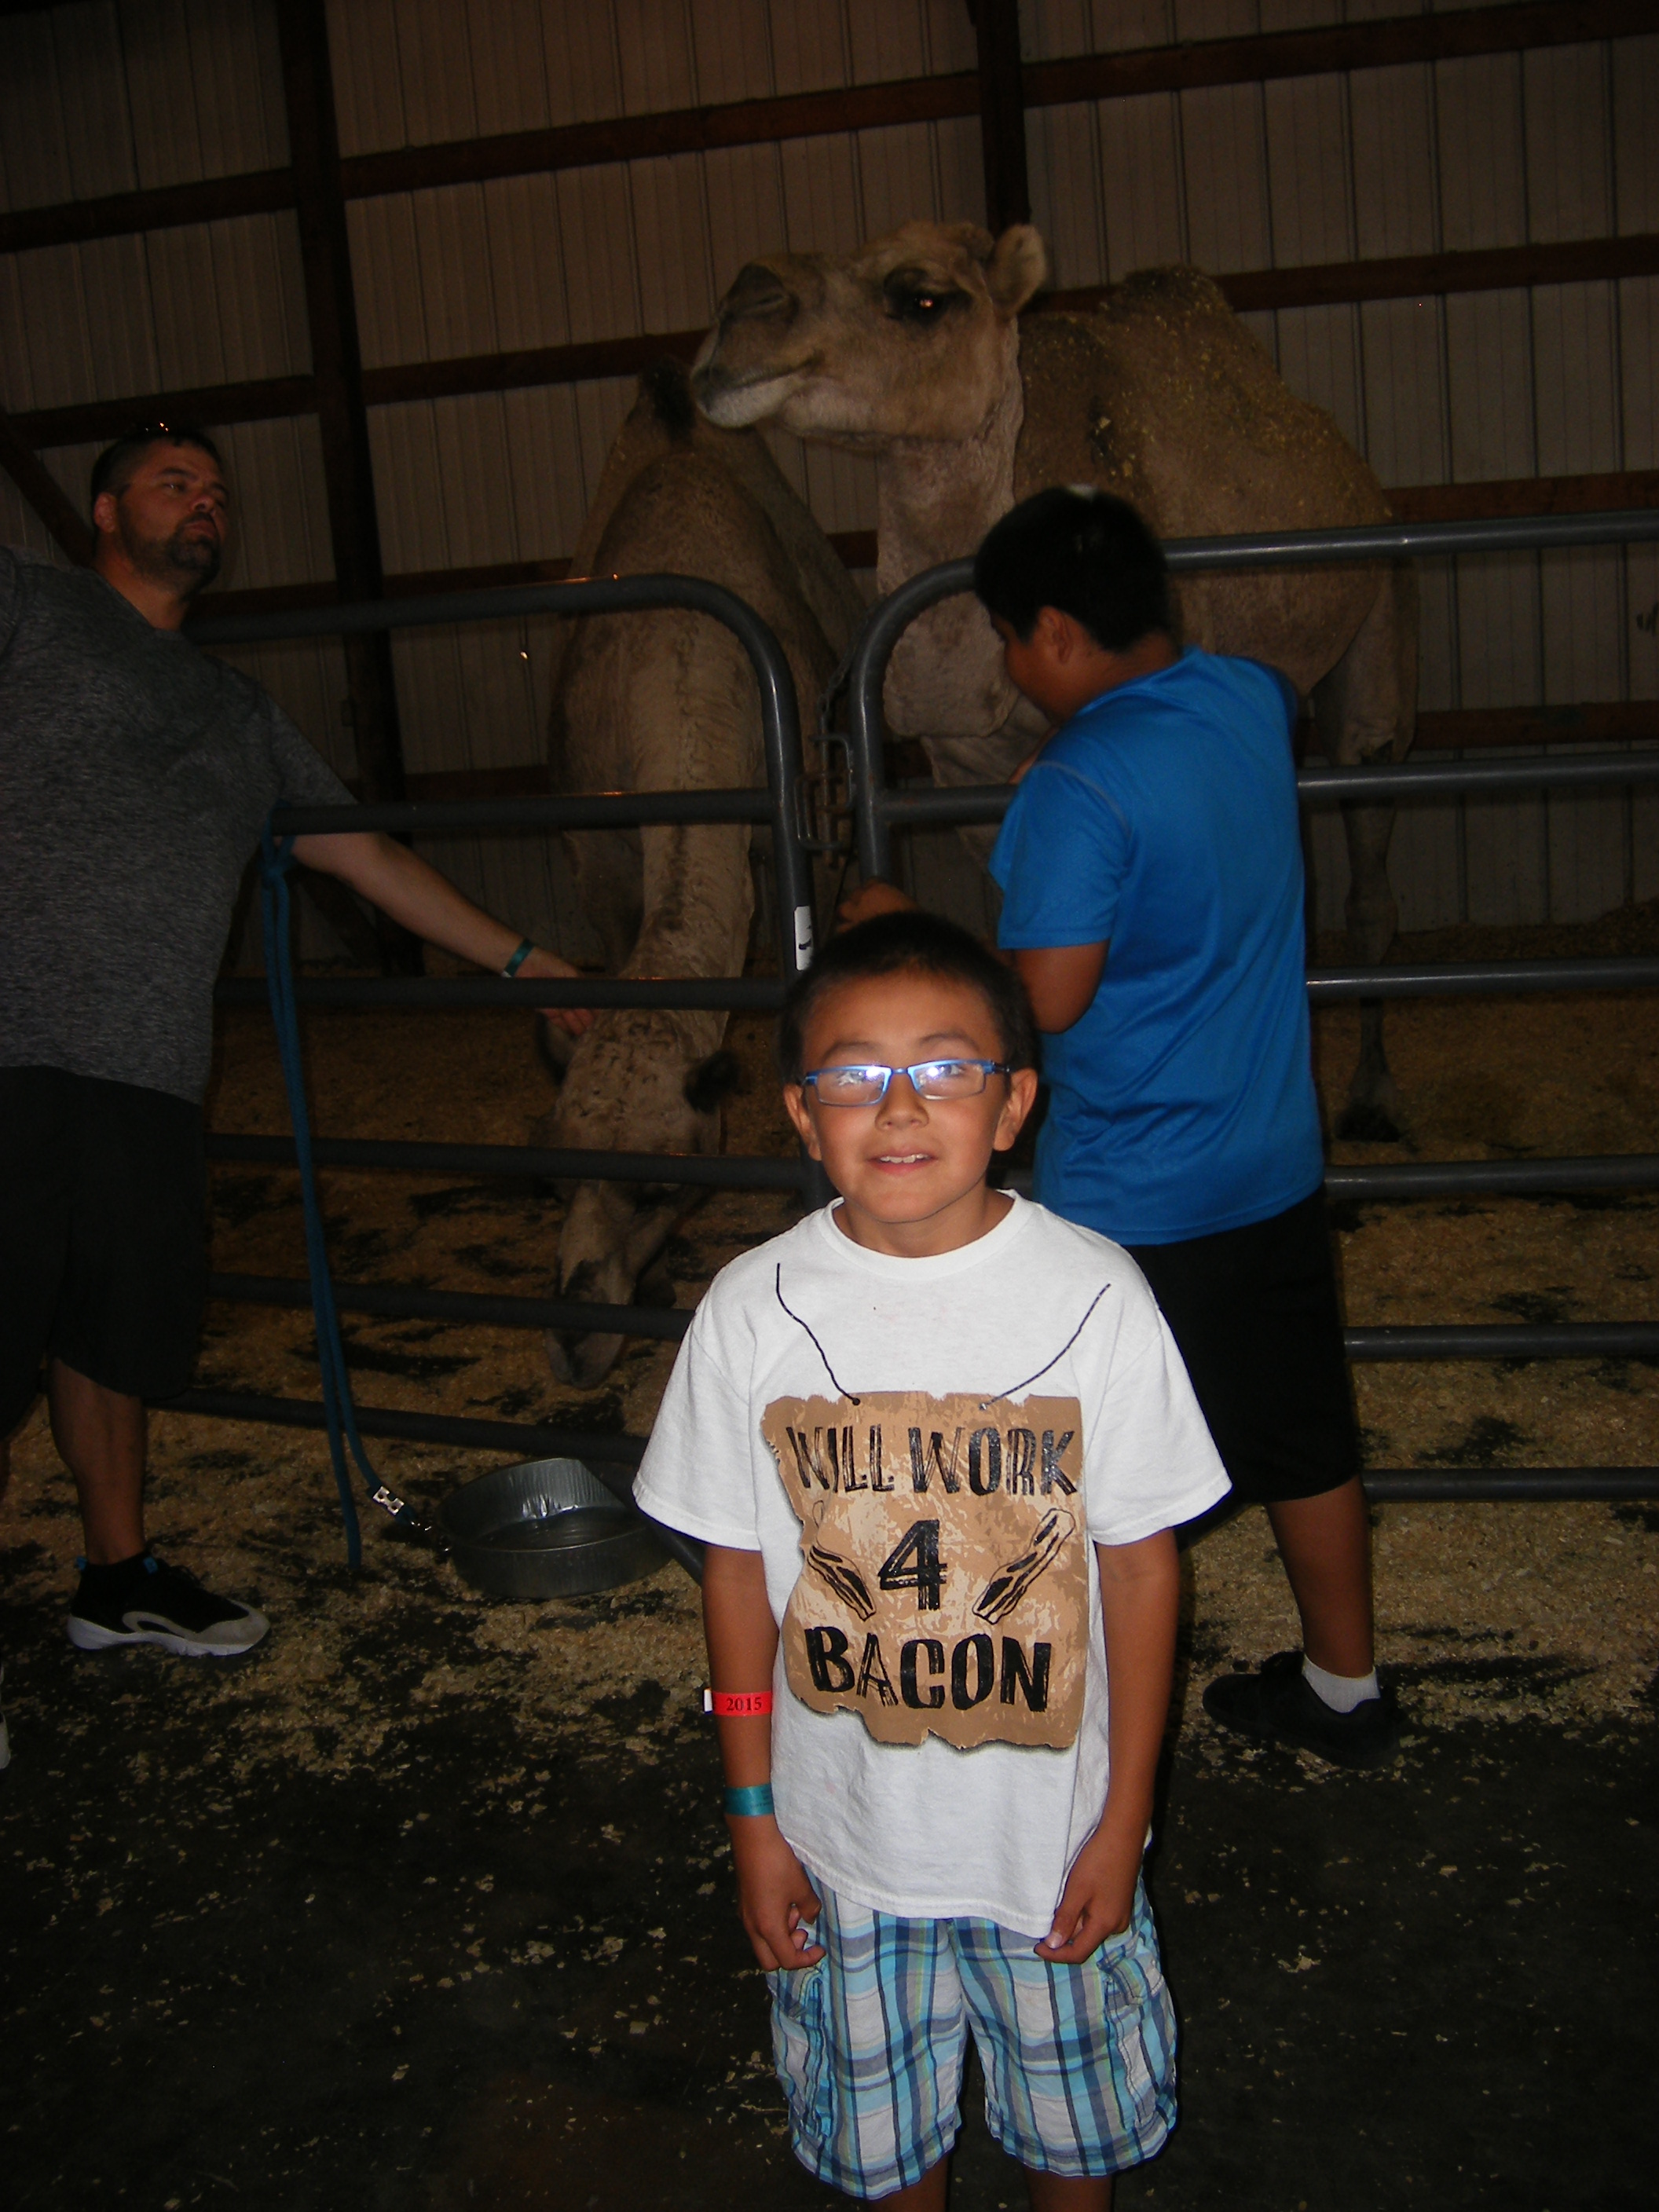 The Lakota(Sioux) students enjoyed feeding the camel. 